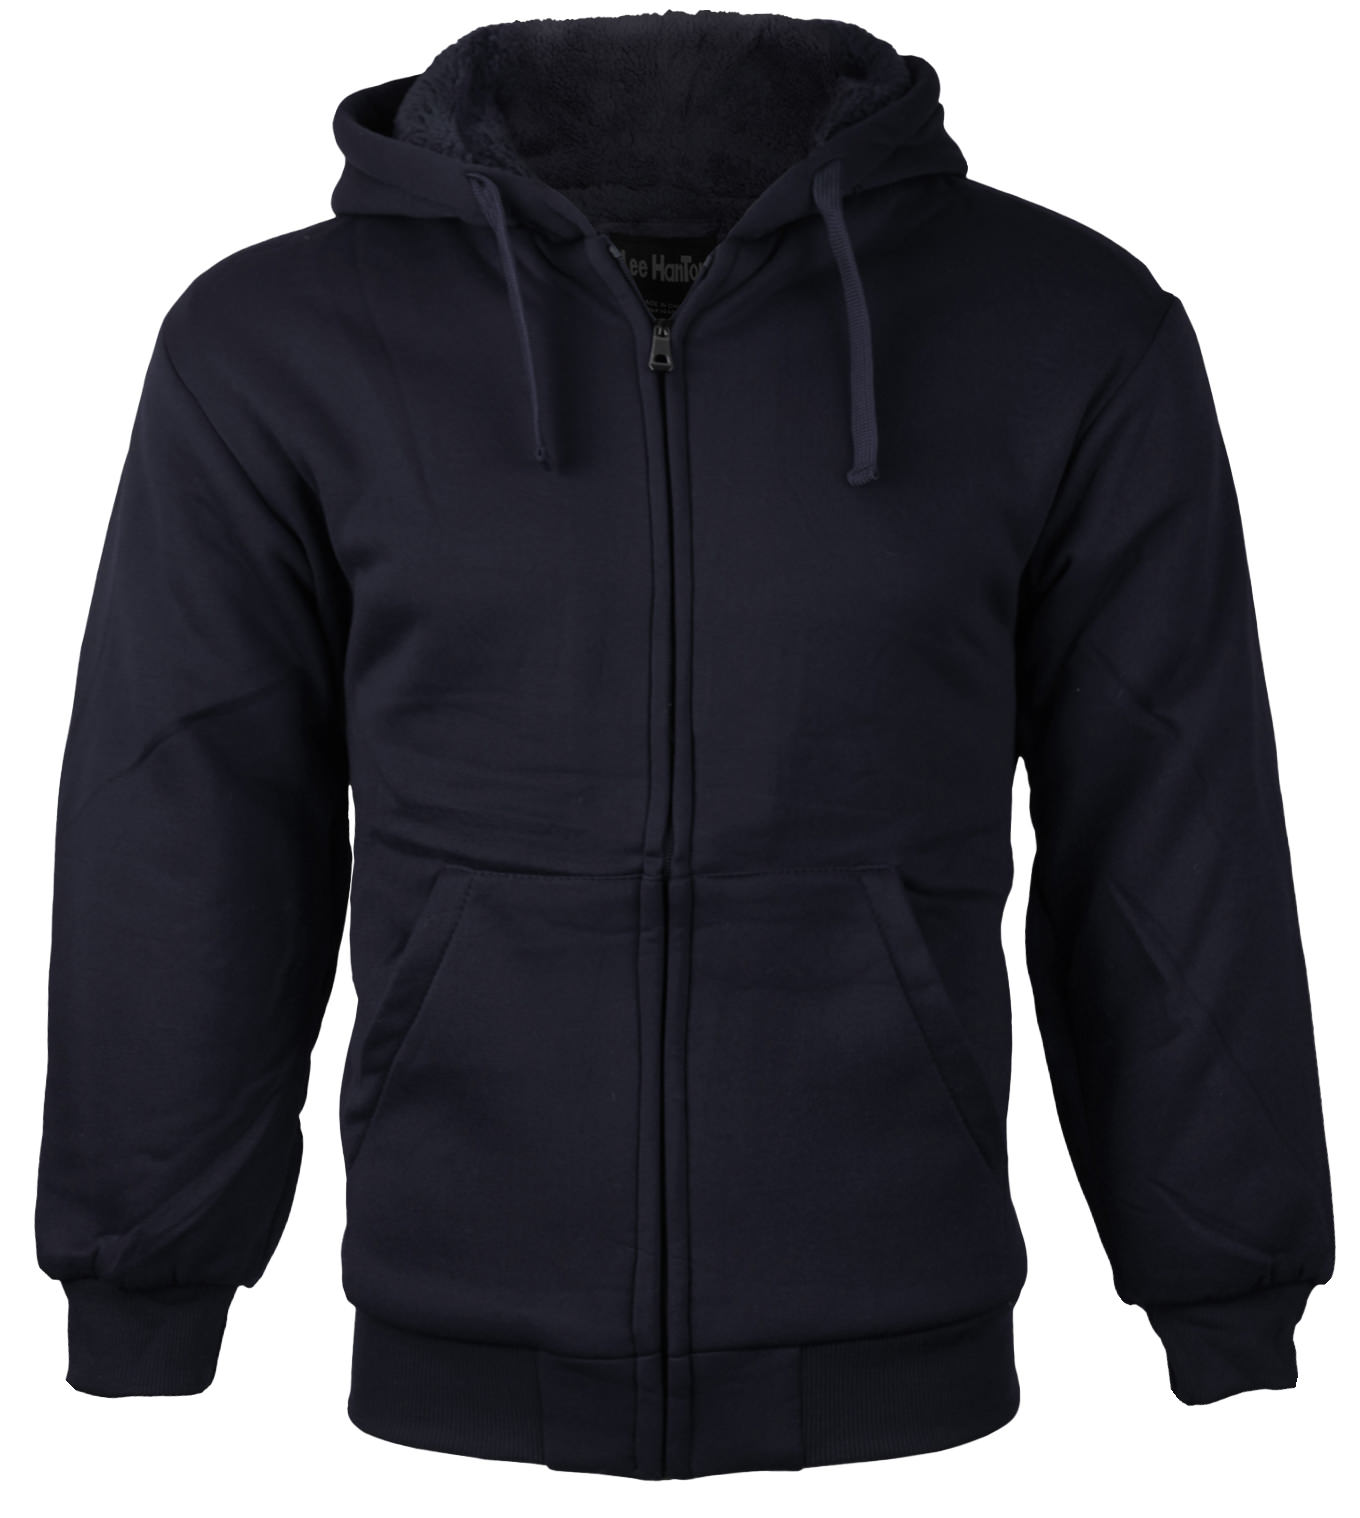 Boys Kids Athletic Soft Sherpa Lined Fleece Zip Up Hoodie Sweater Jacket (Navy, XL) - image 1 of 1